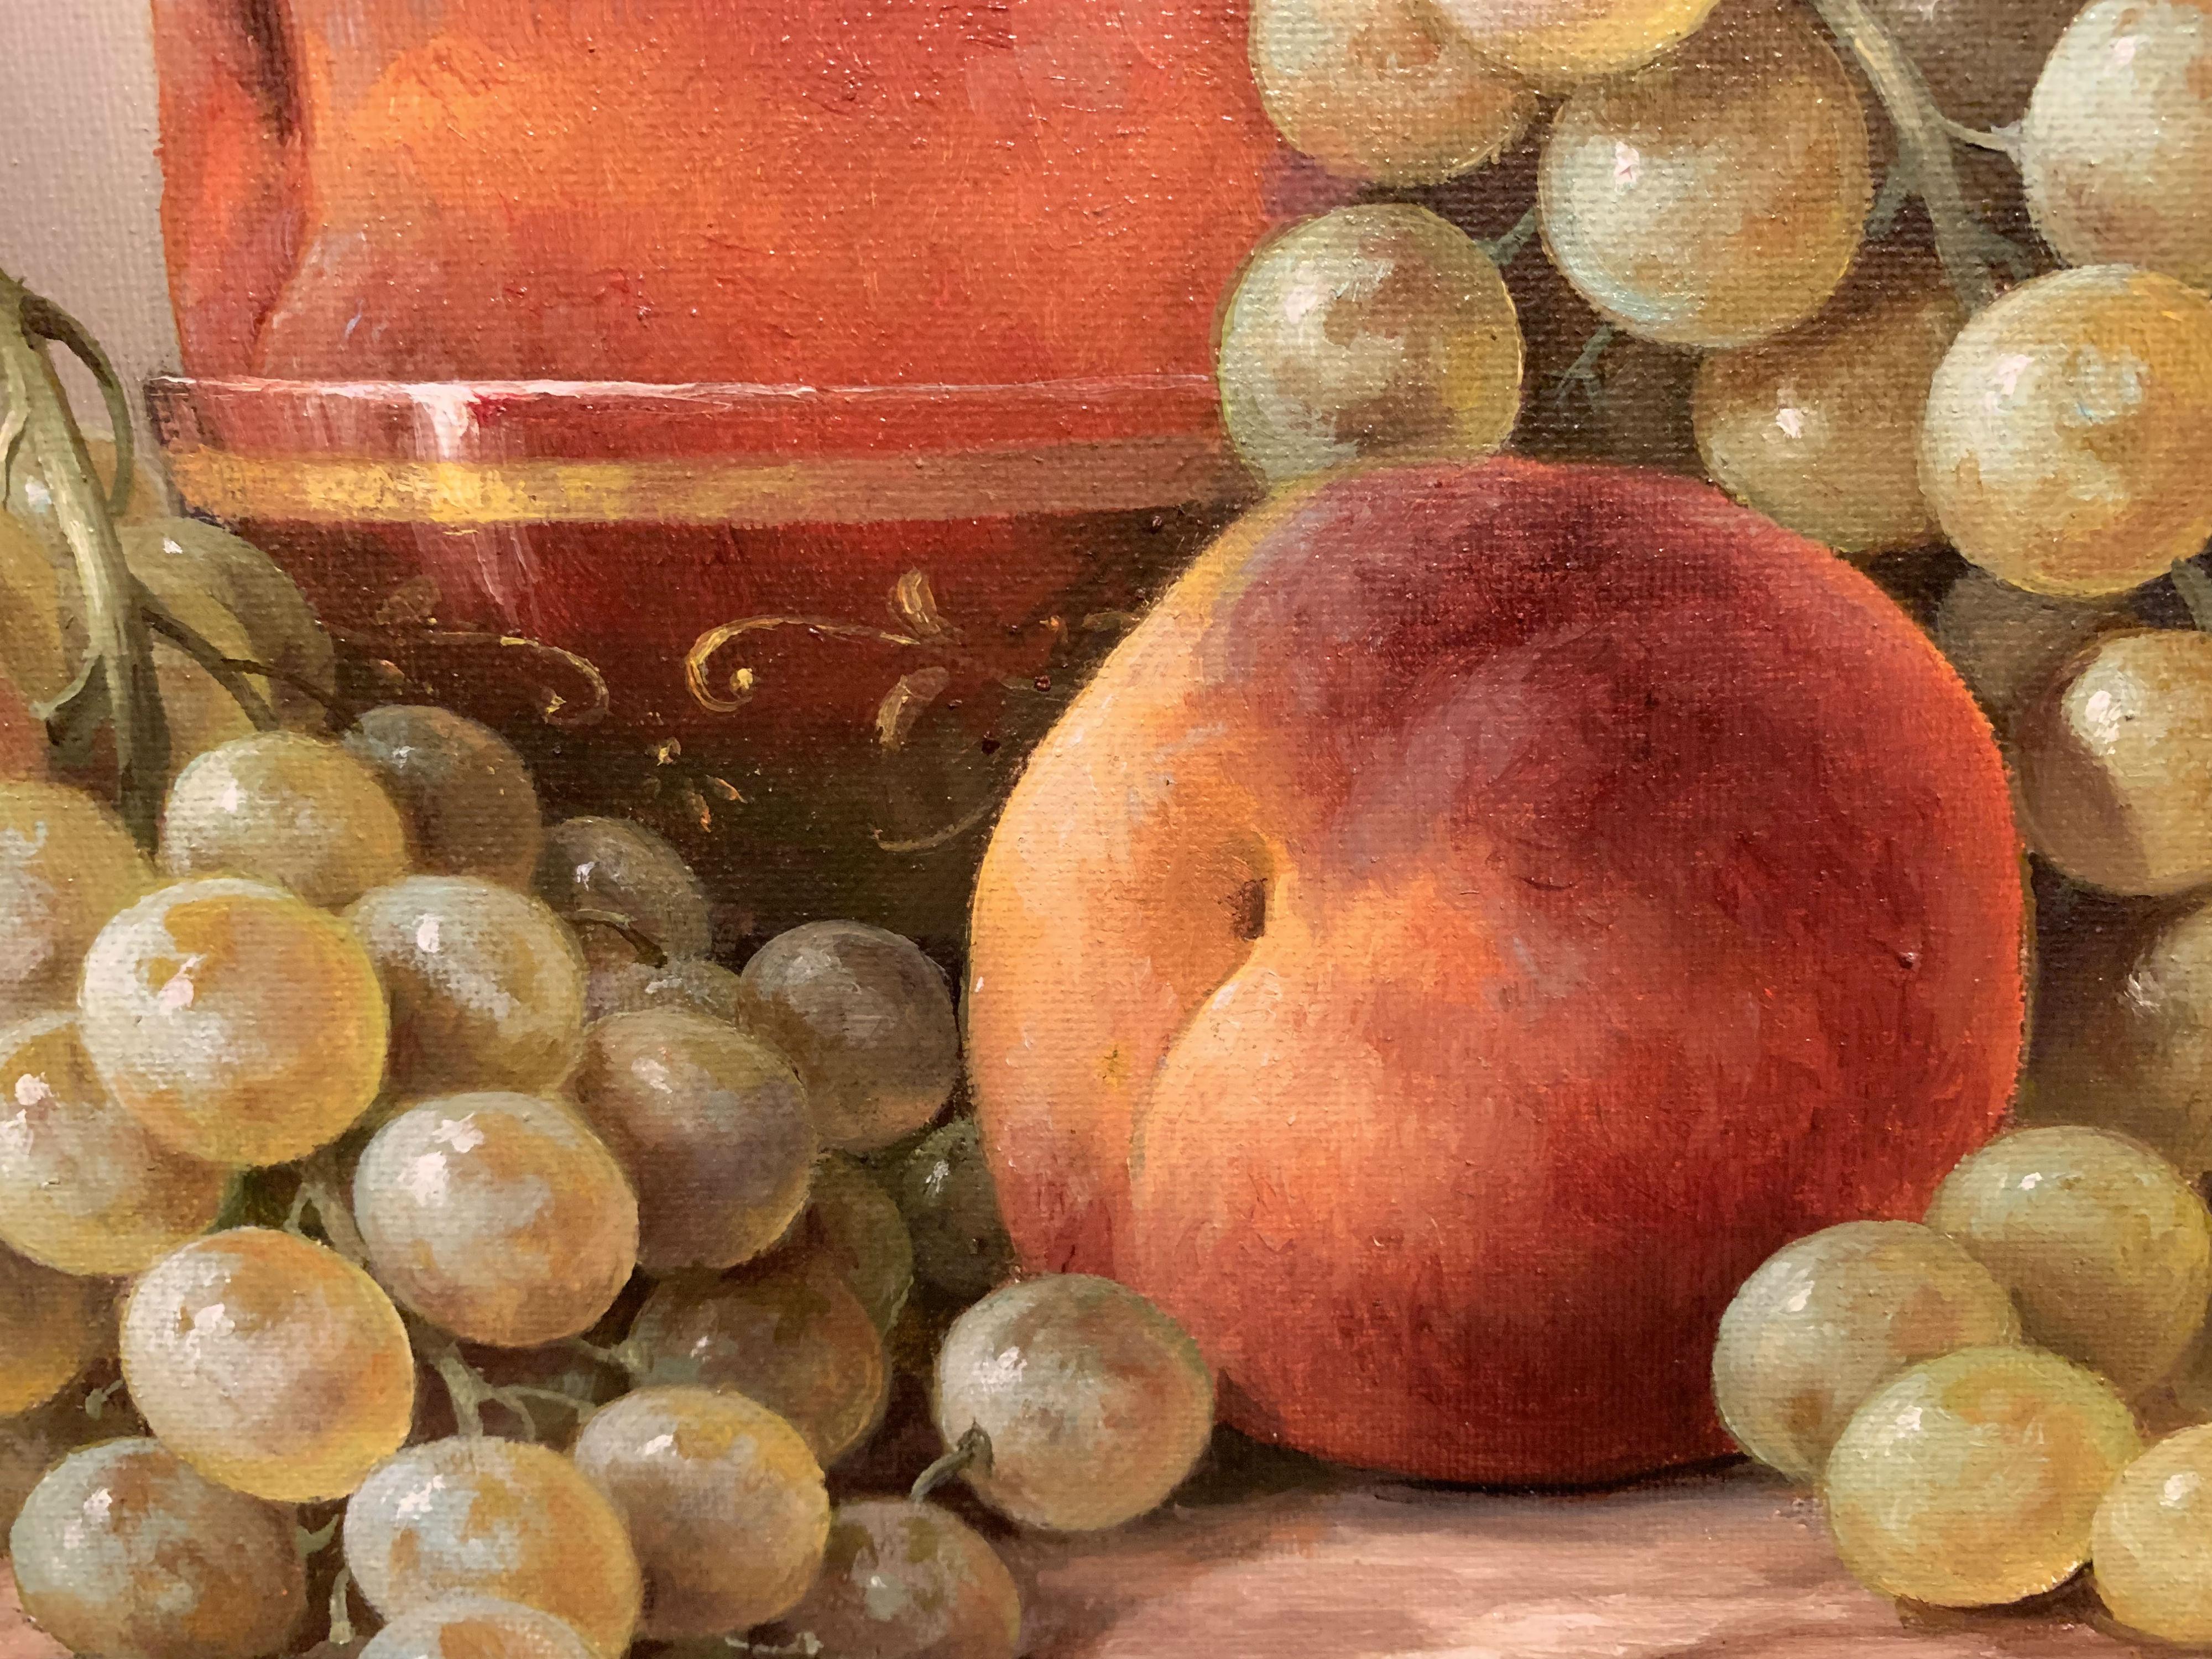 Peaches - American Realist Art by Nikolay Rizhankov